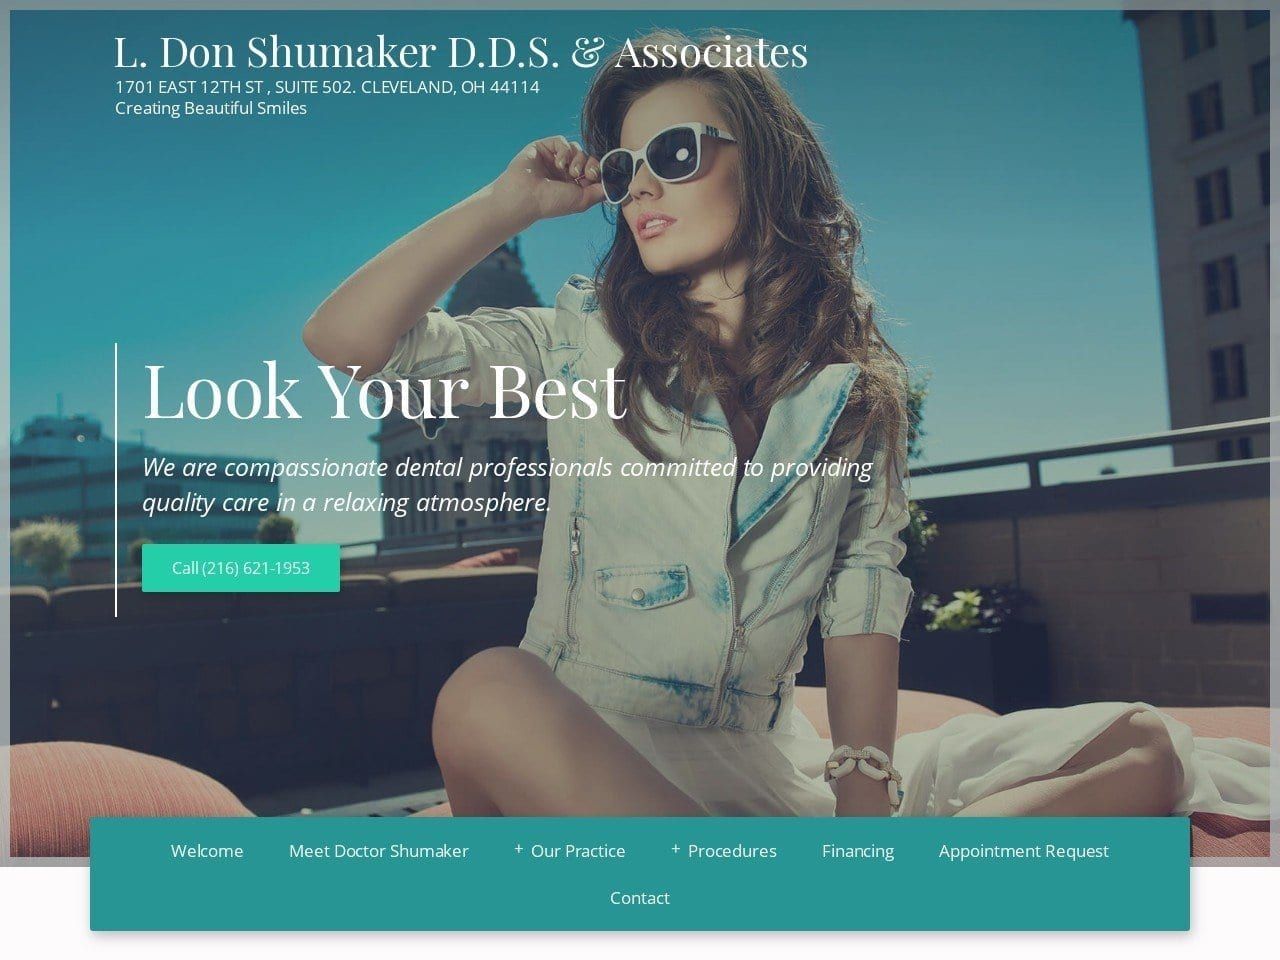 L. Don Shumaker & Associates Website Screenshot from whitesmilecleveland.com